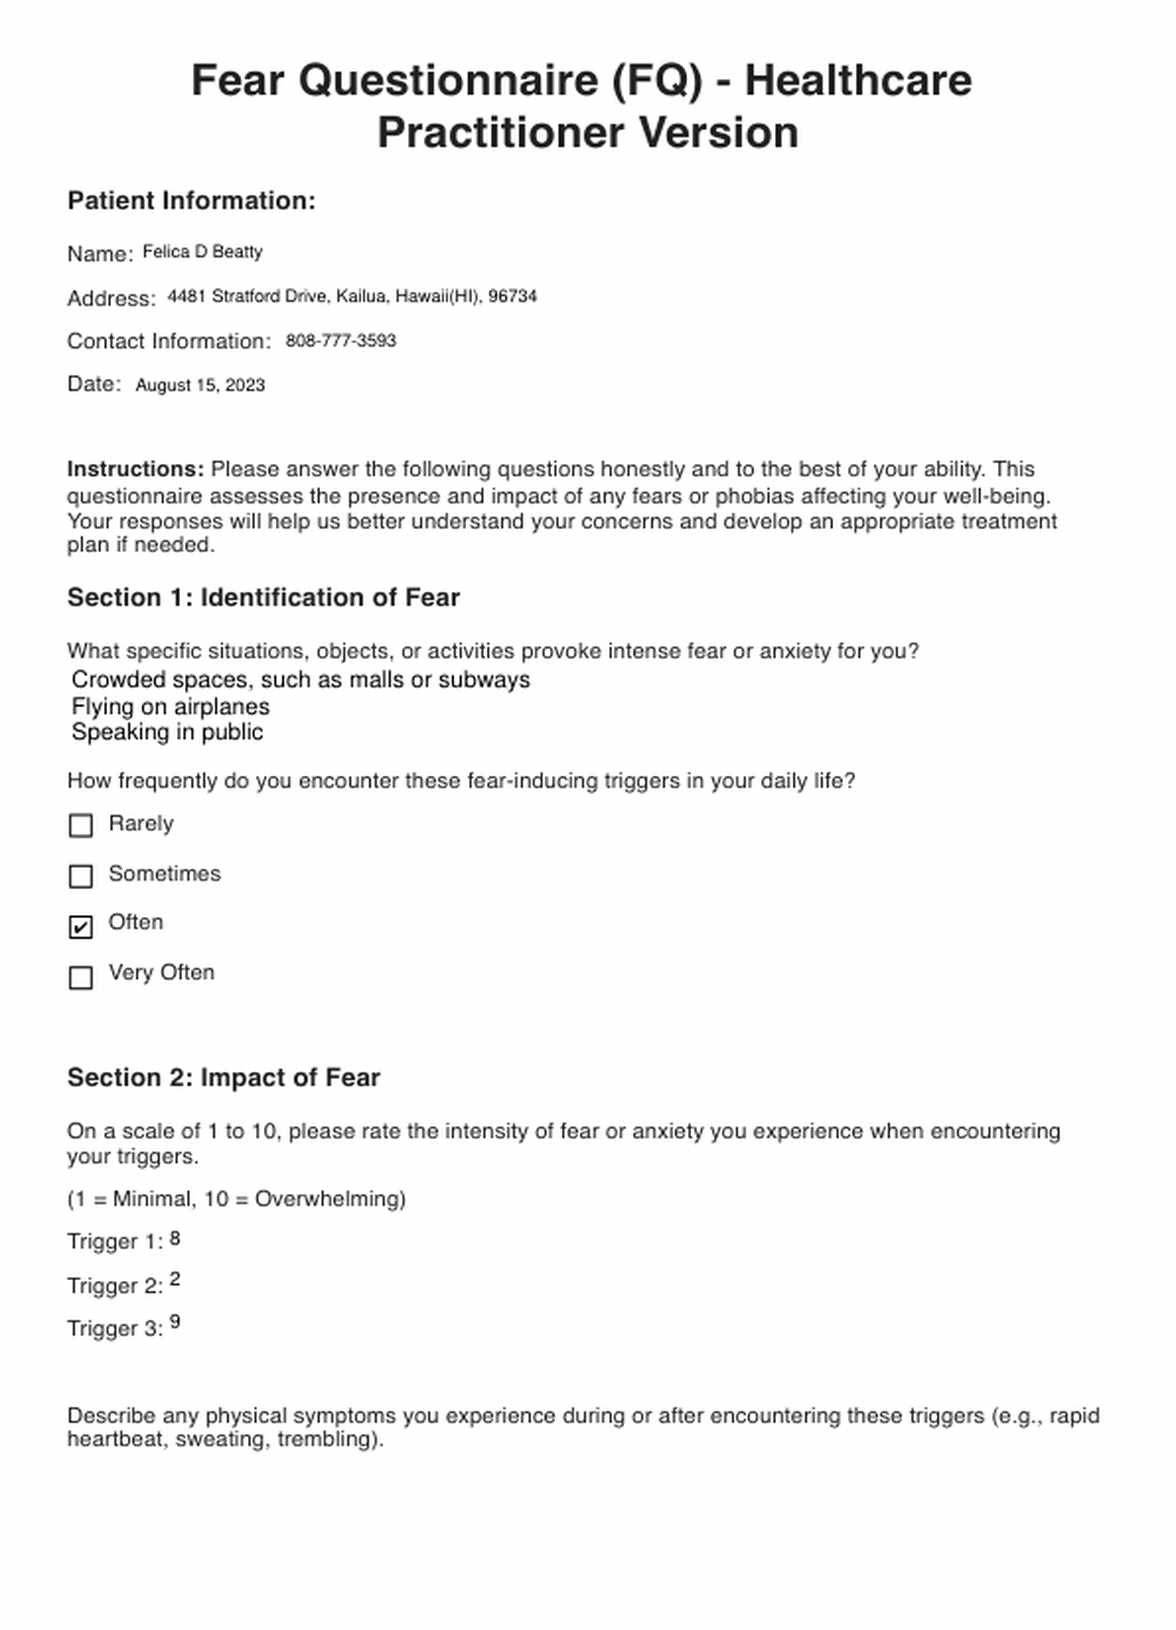 Fear Questionnaire (FQ) PDF Example